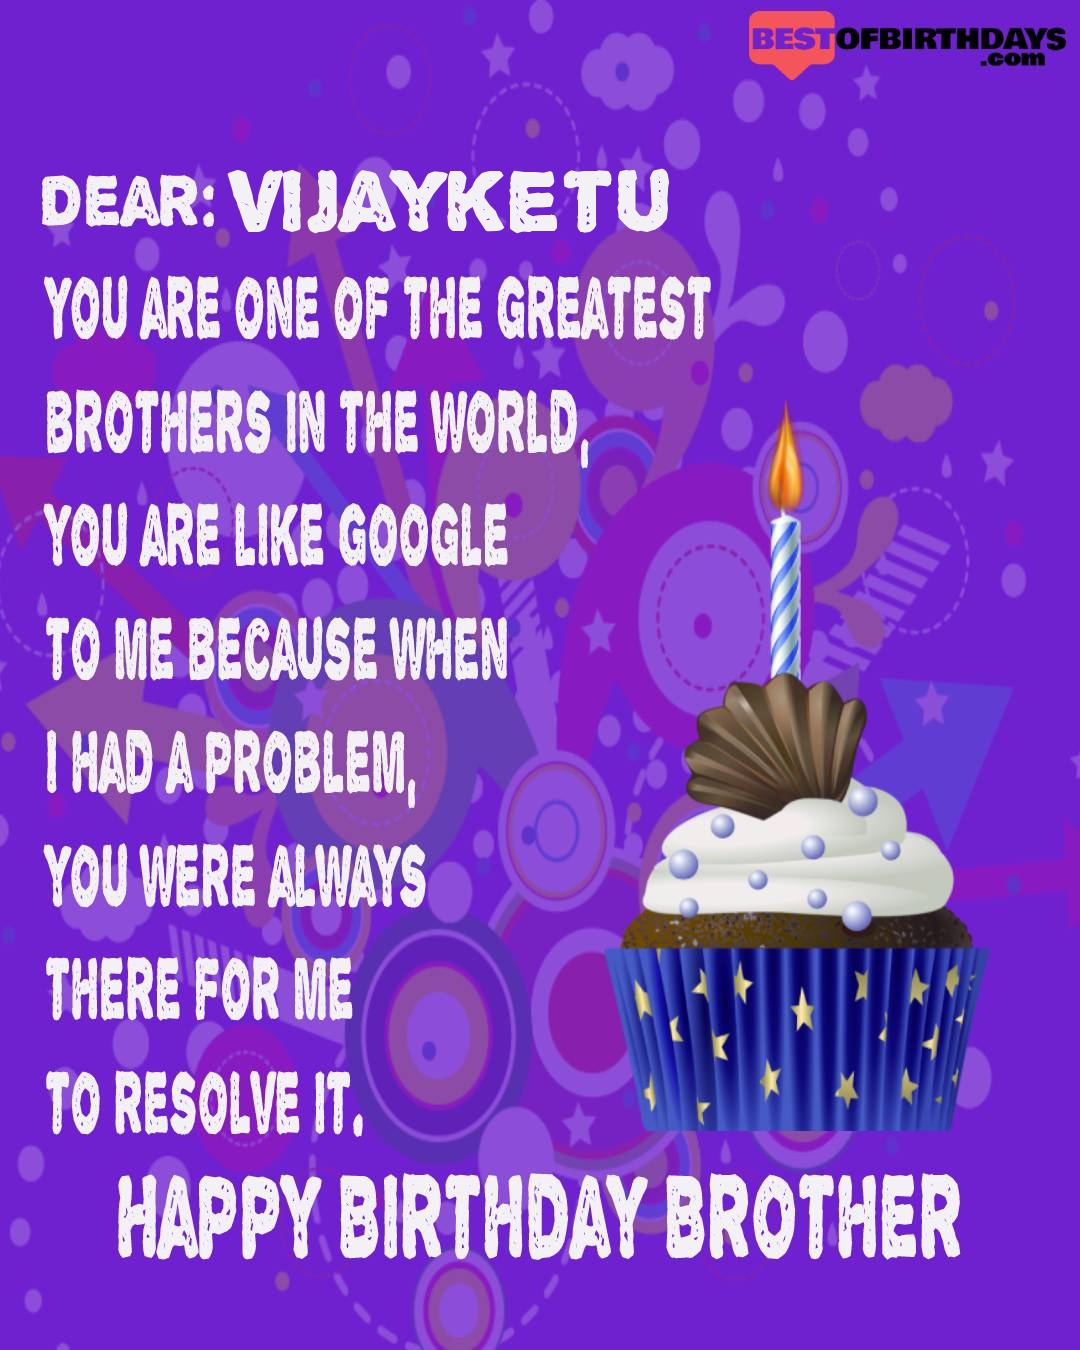 Happy birthday vijayketu bhai brother bro